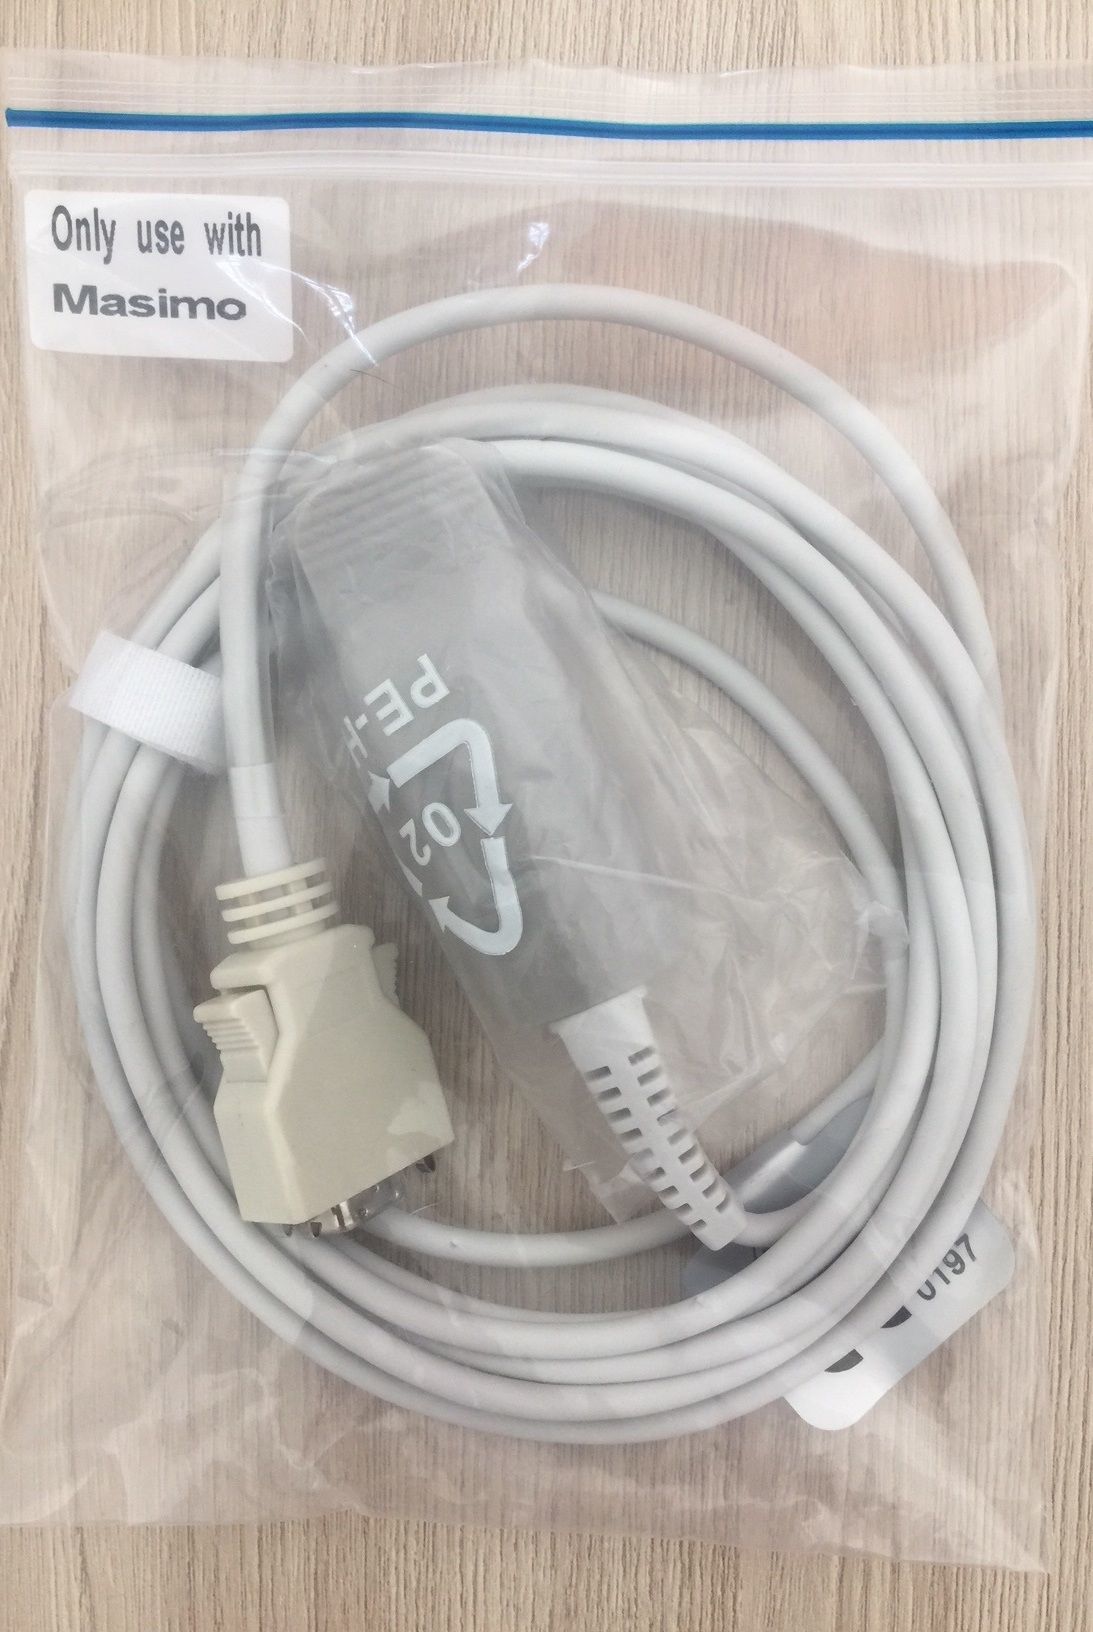 Spo2 Adult sensor cable for Masimo 14 Pins_สายแซทวัด Spo2 สำหรับผู้ใหญ่แบบมาซิโม 14 พิน